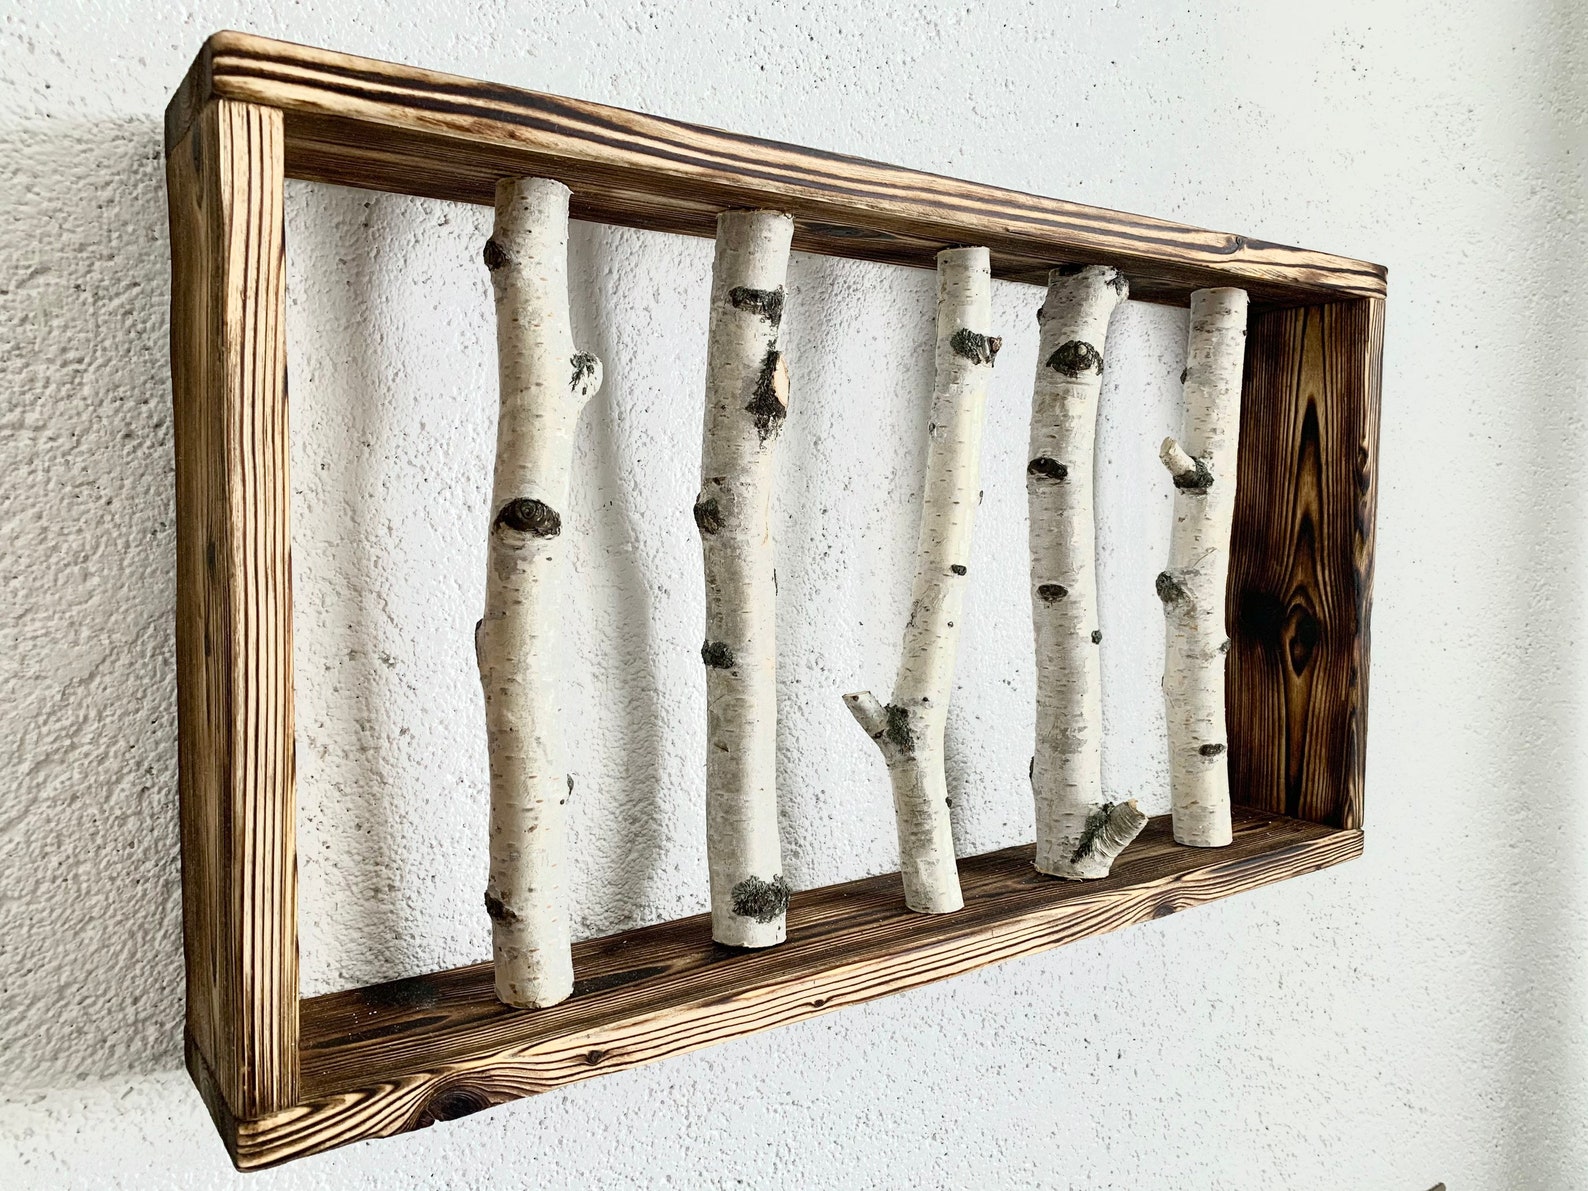 Birch wall hanging. Birch log. Birch wall display shelf. White | Etsy